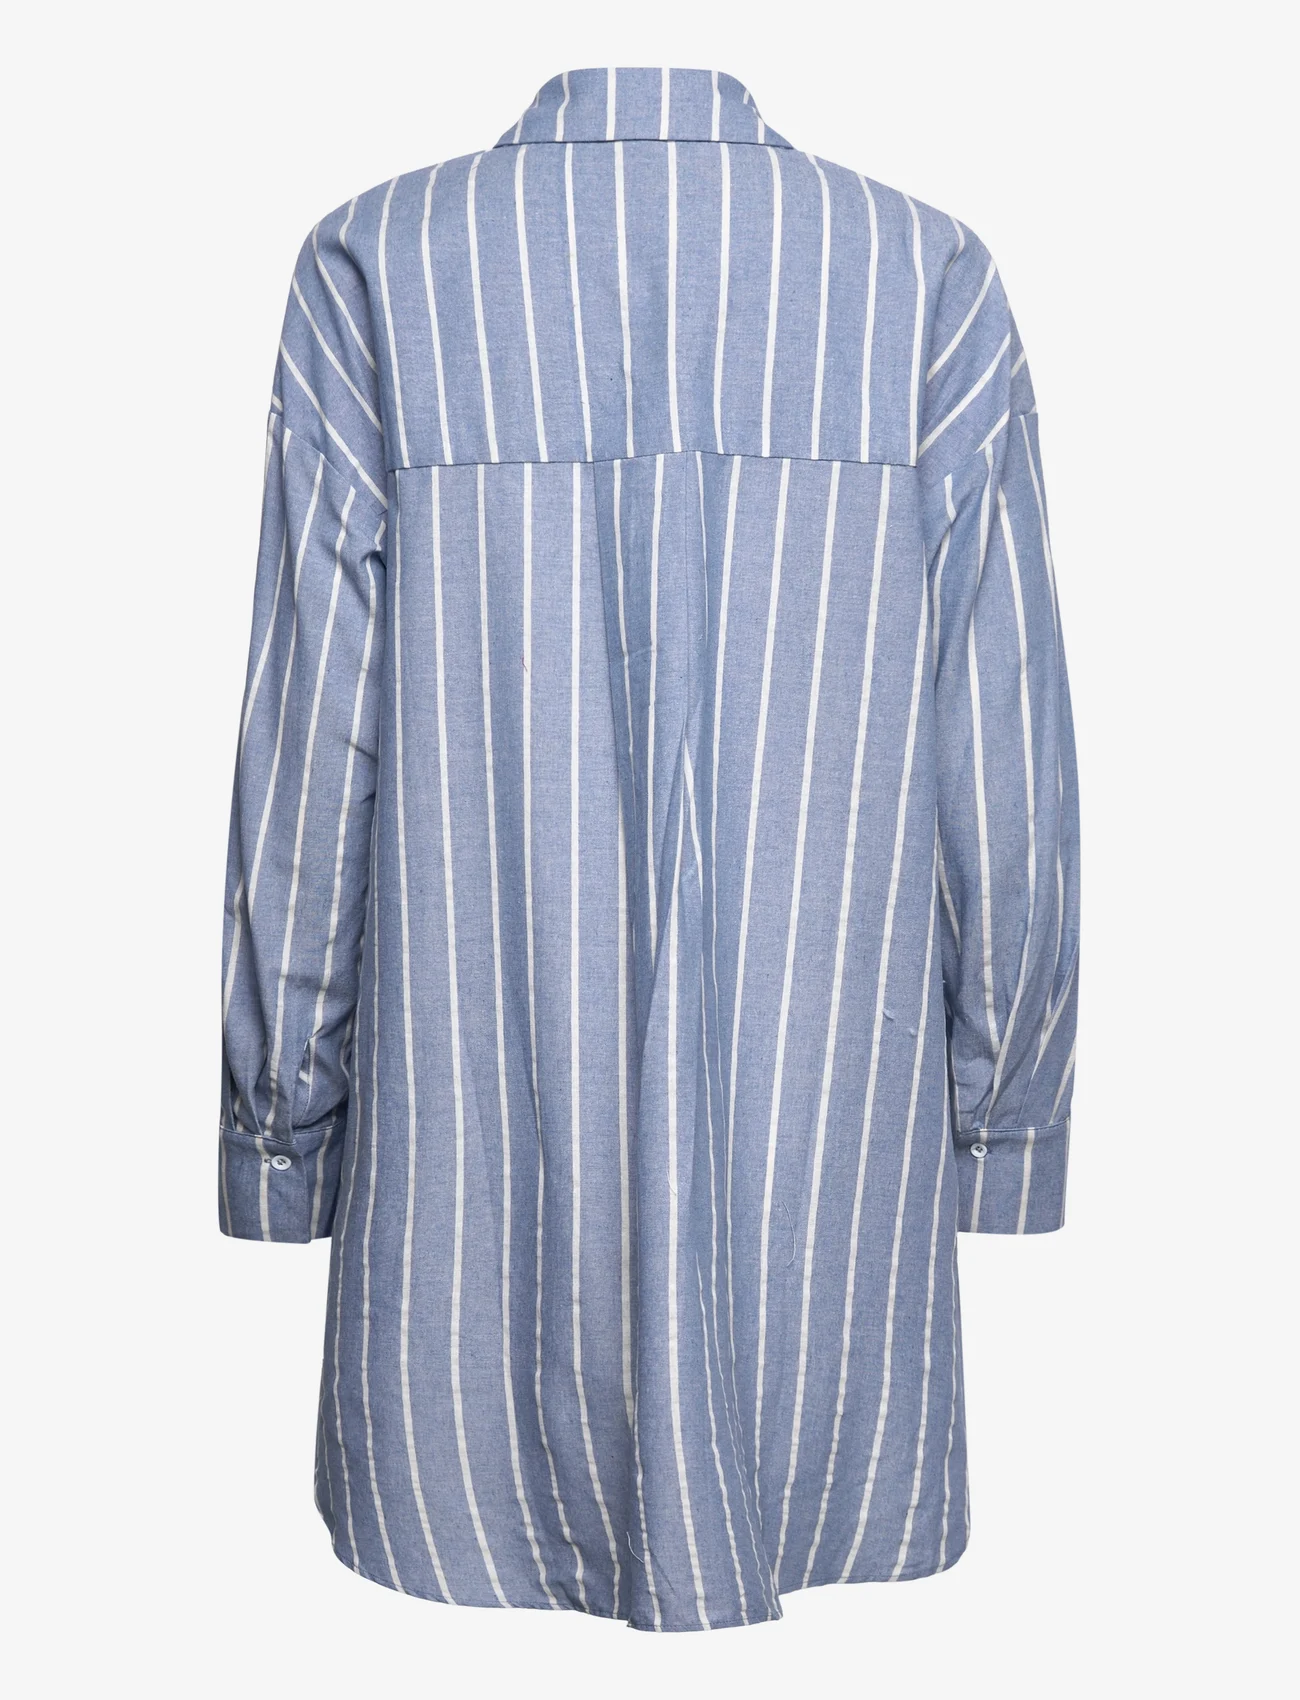 A-View - Fabia shirt - langærmede skjorter - light blue/white stripe - 1